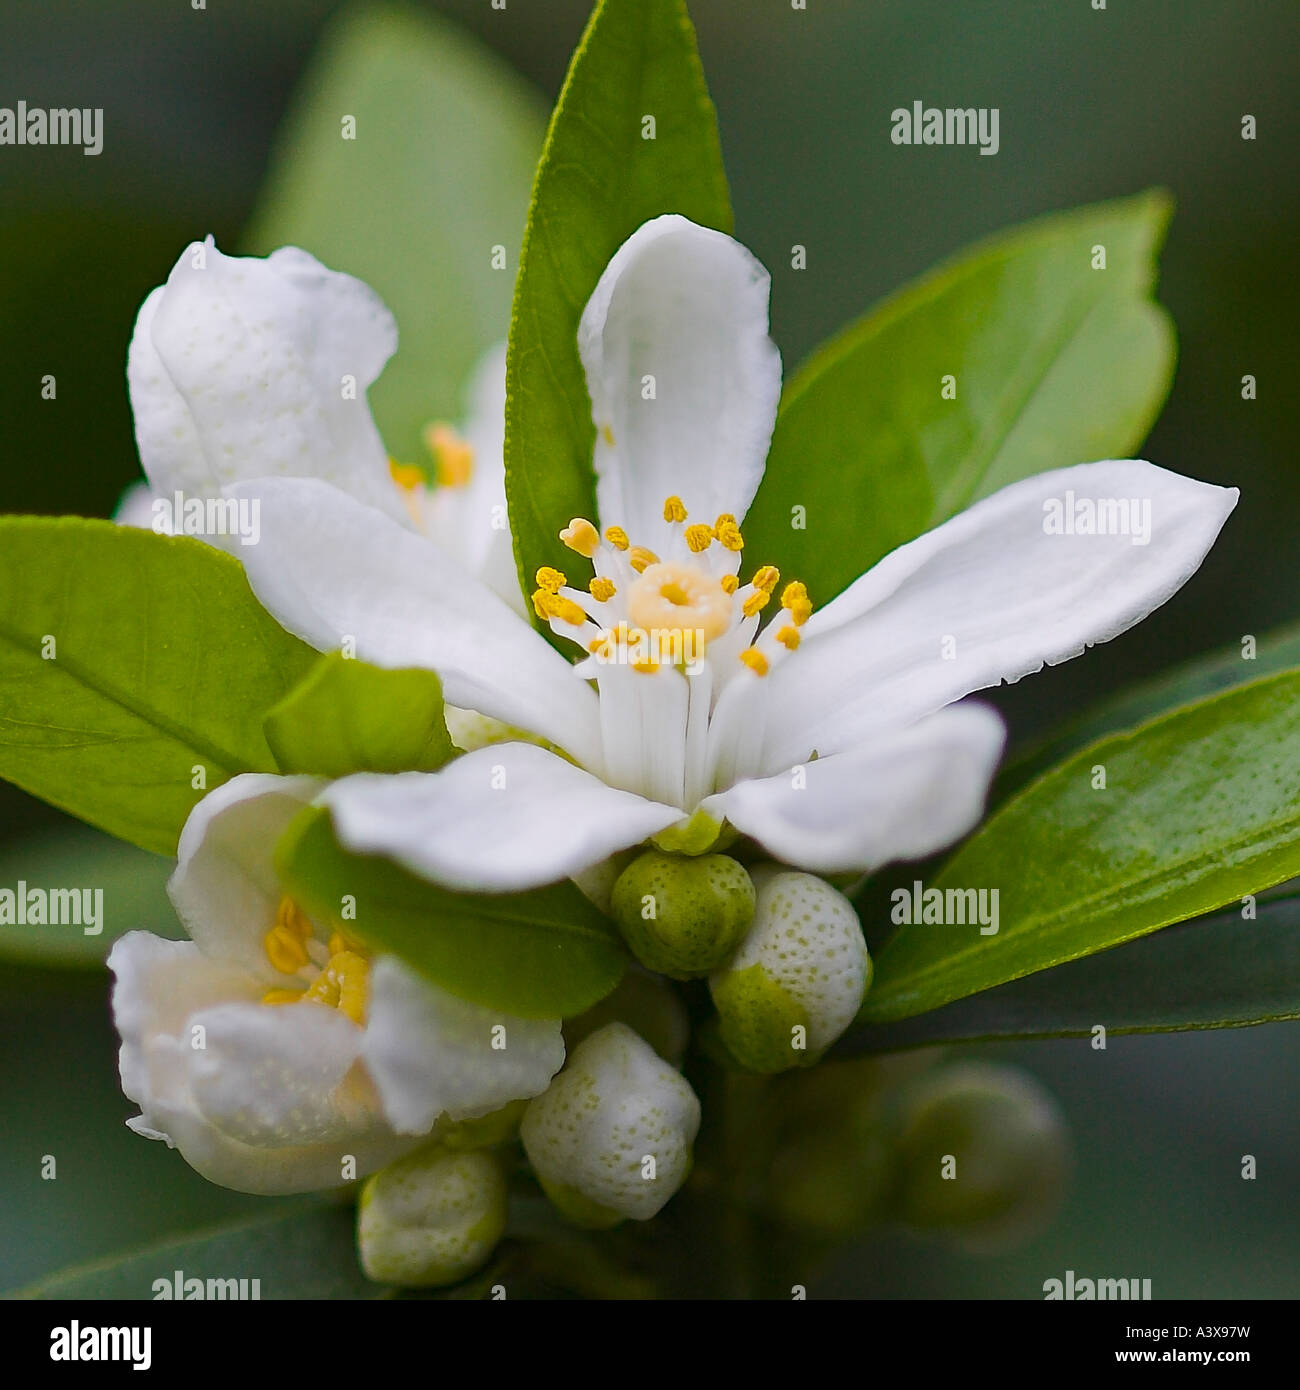 Poncirus trifoliata x Citrus sinensis Carrizo Citrange flower close-up and leaves Stock Photo